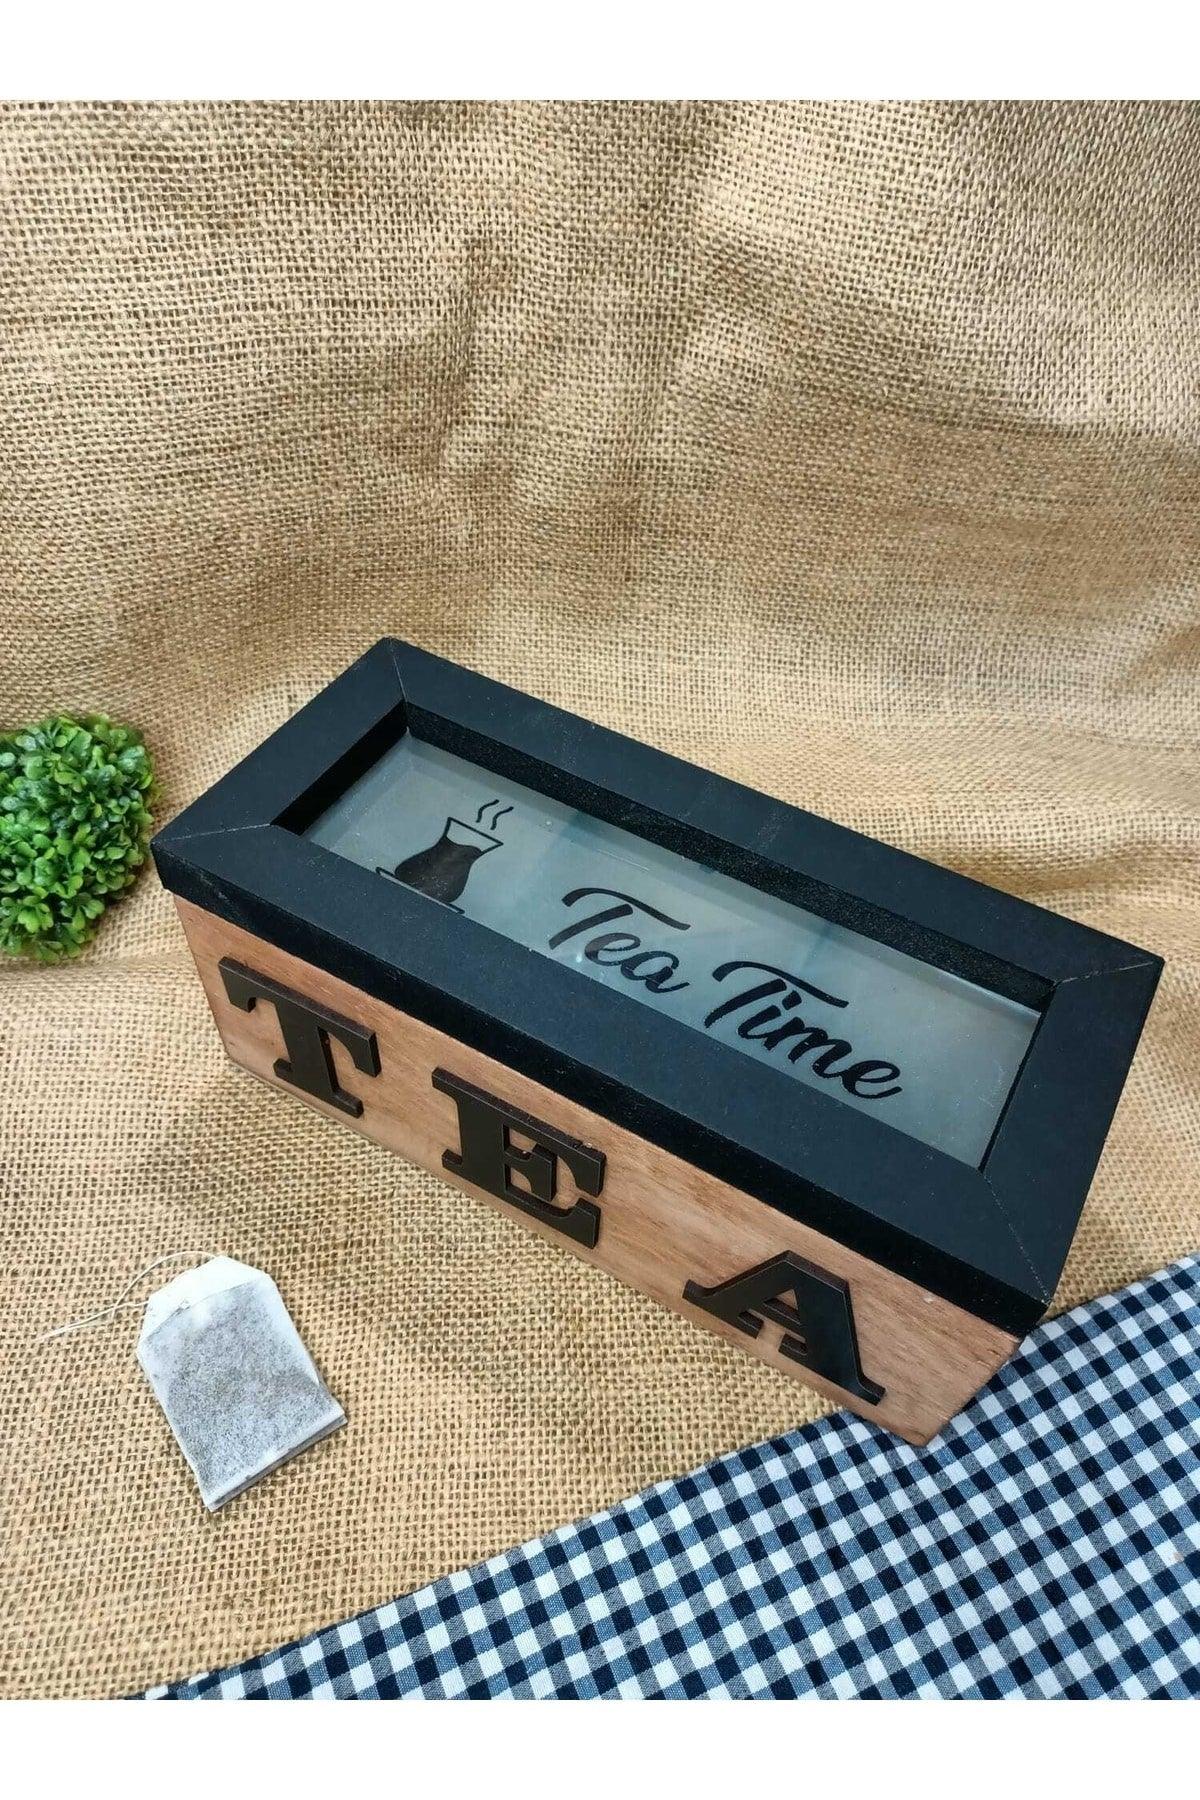 Wooden Handmade Tea Box